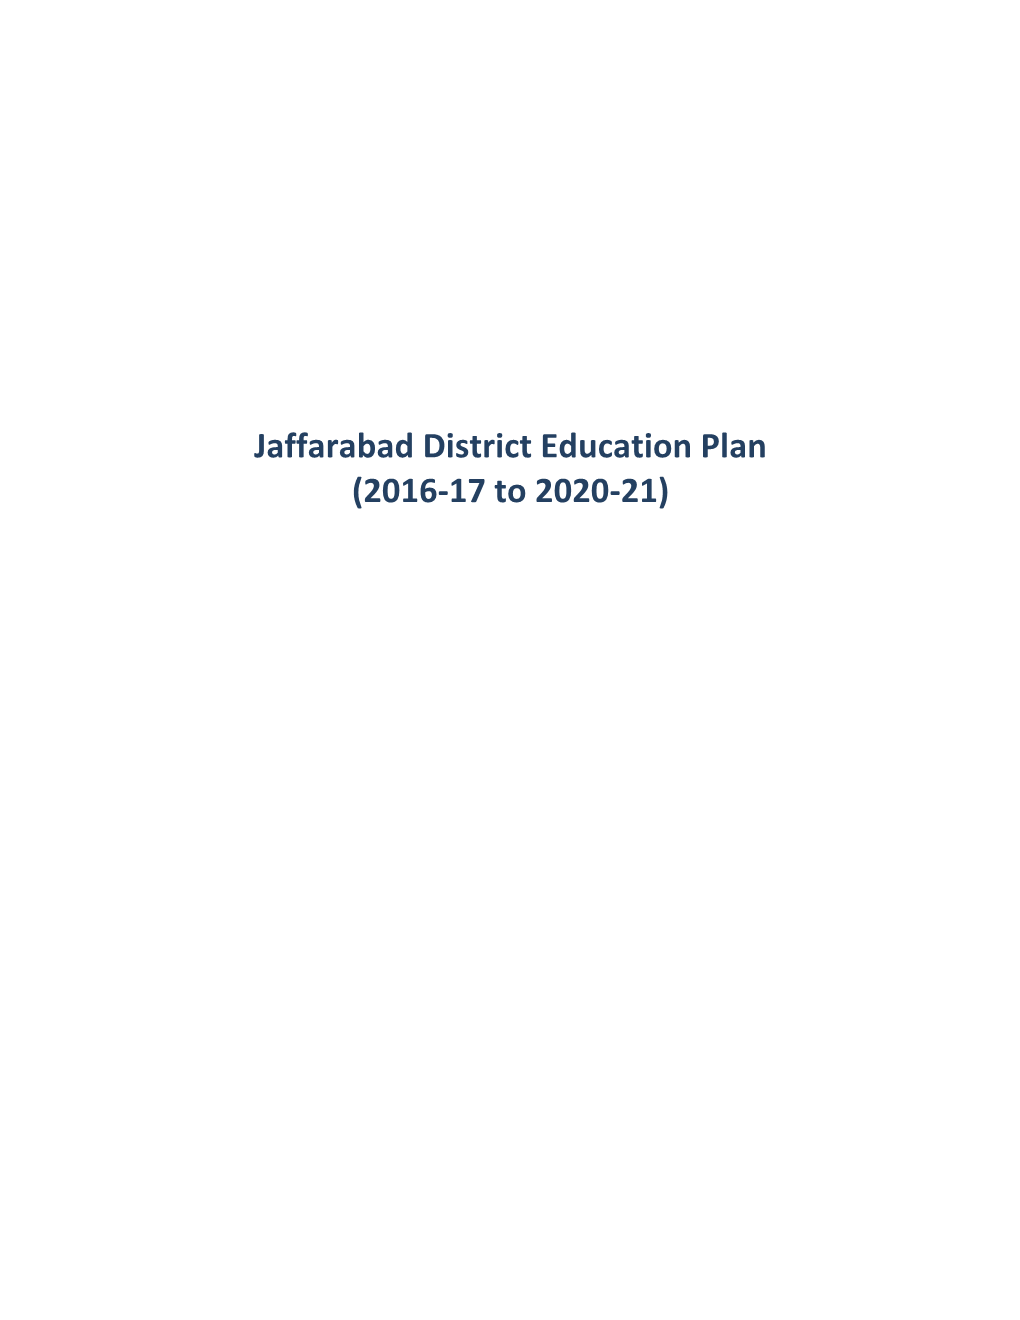 Jaffarabad District Education Plan (2016-17 to 2020-21)